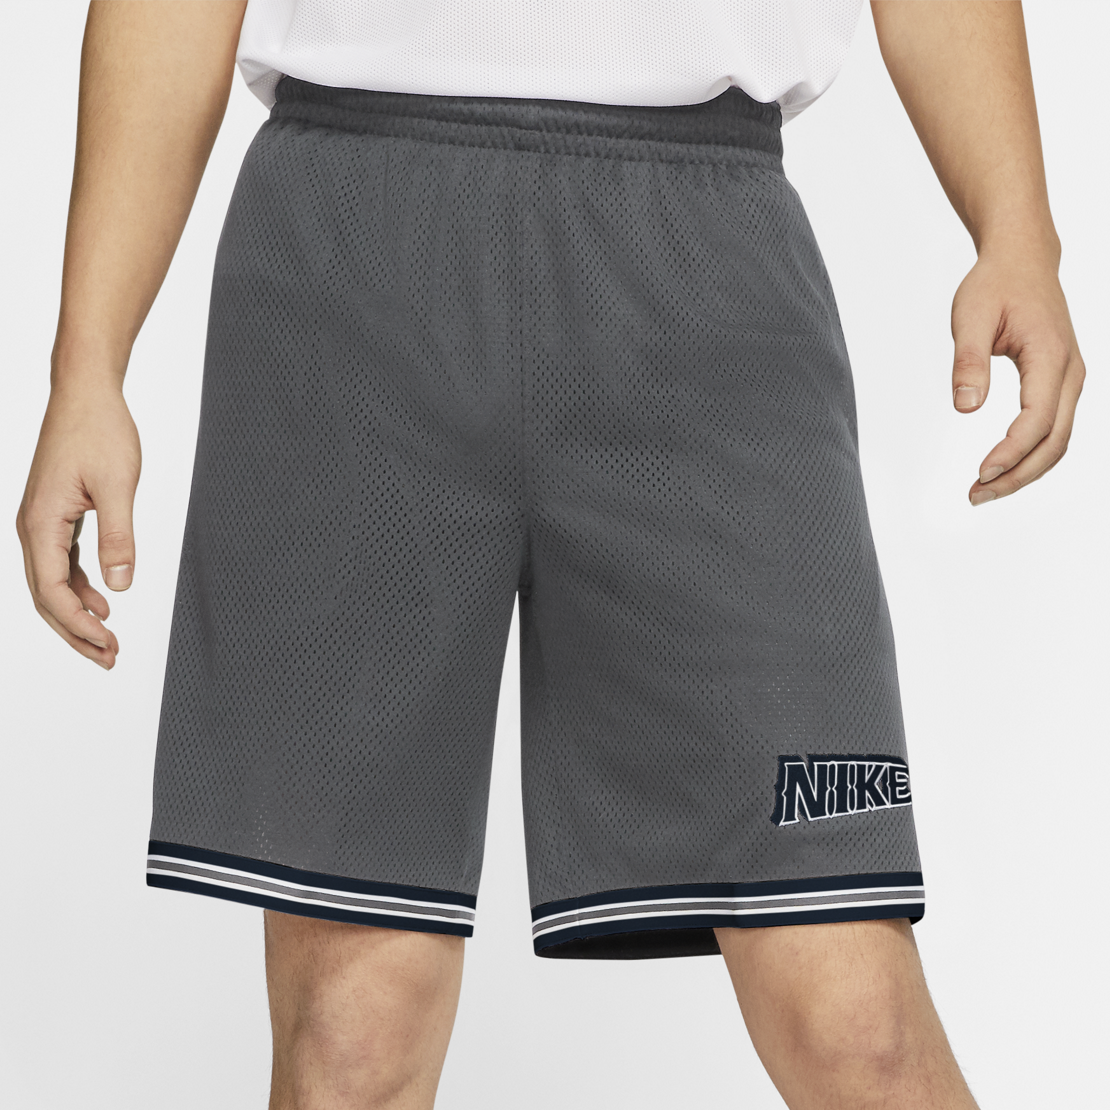 nike retro basketball shorts